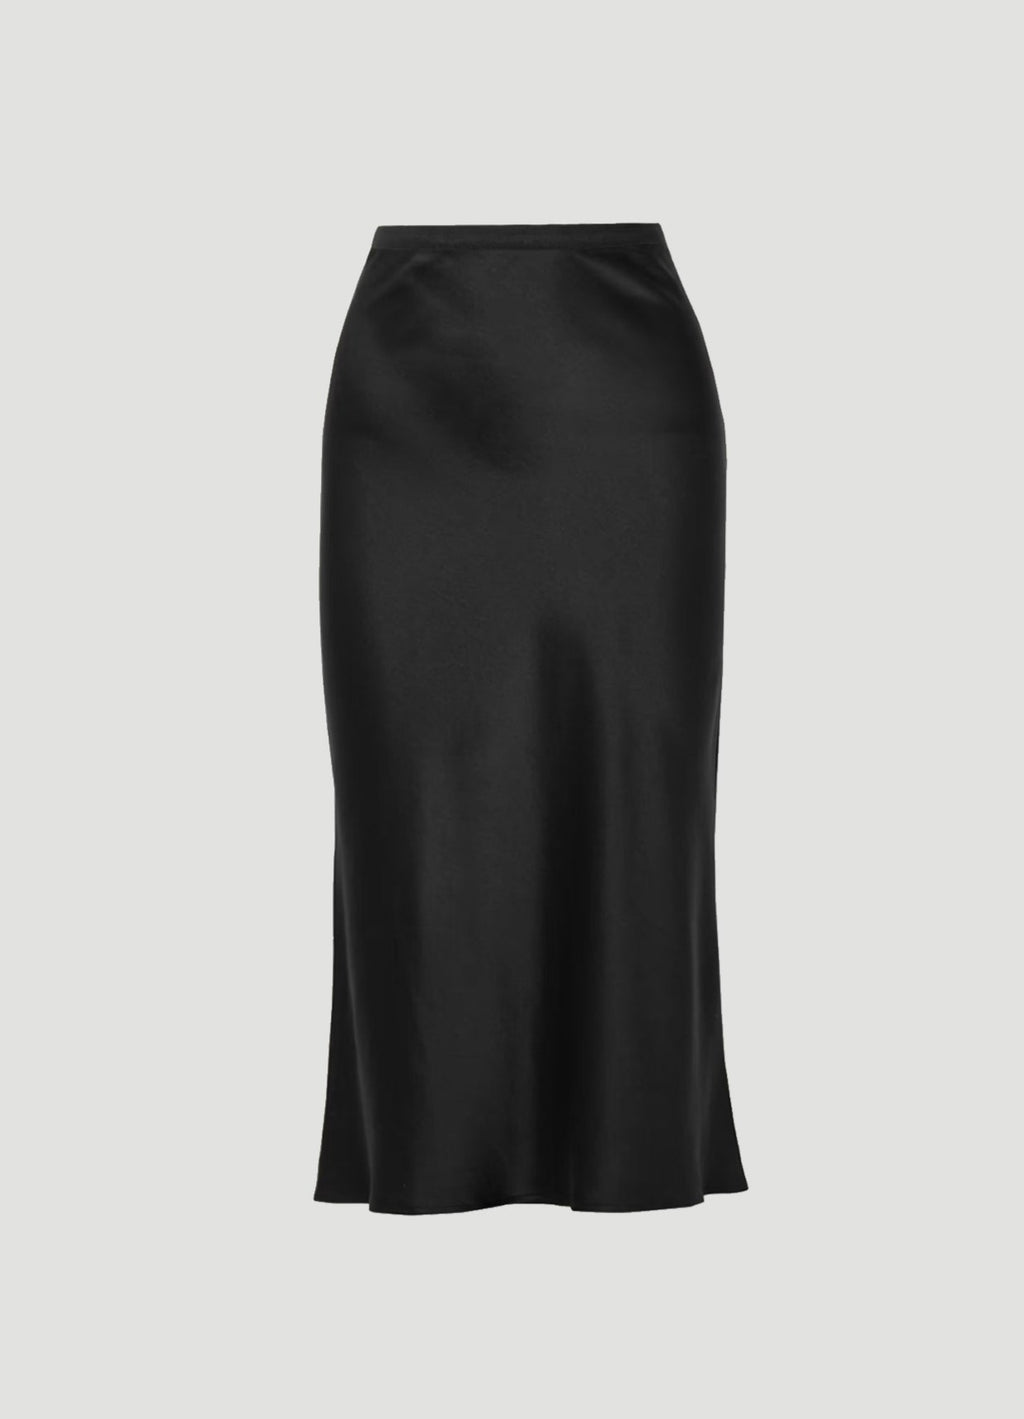 Satin Bias Cut Skirt in Black 